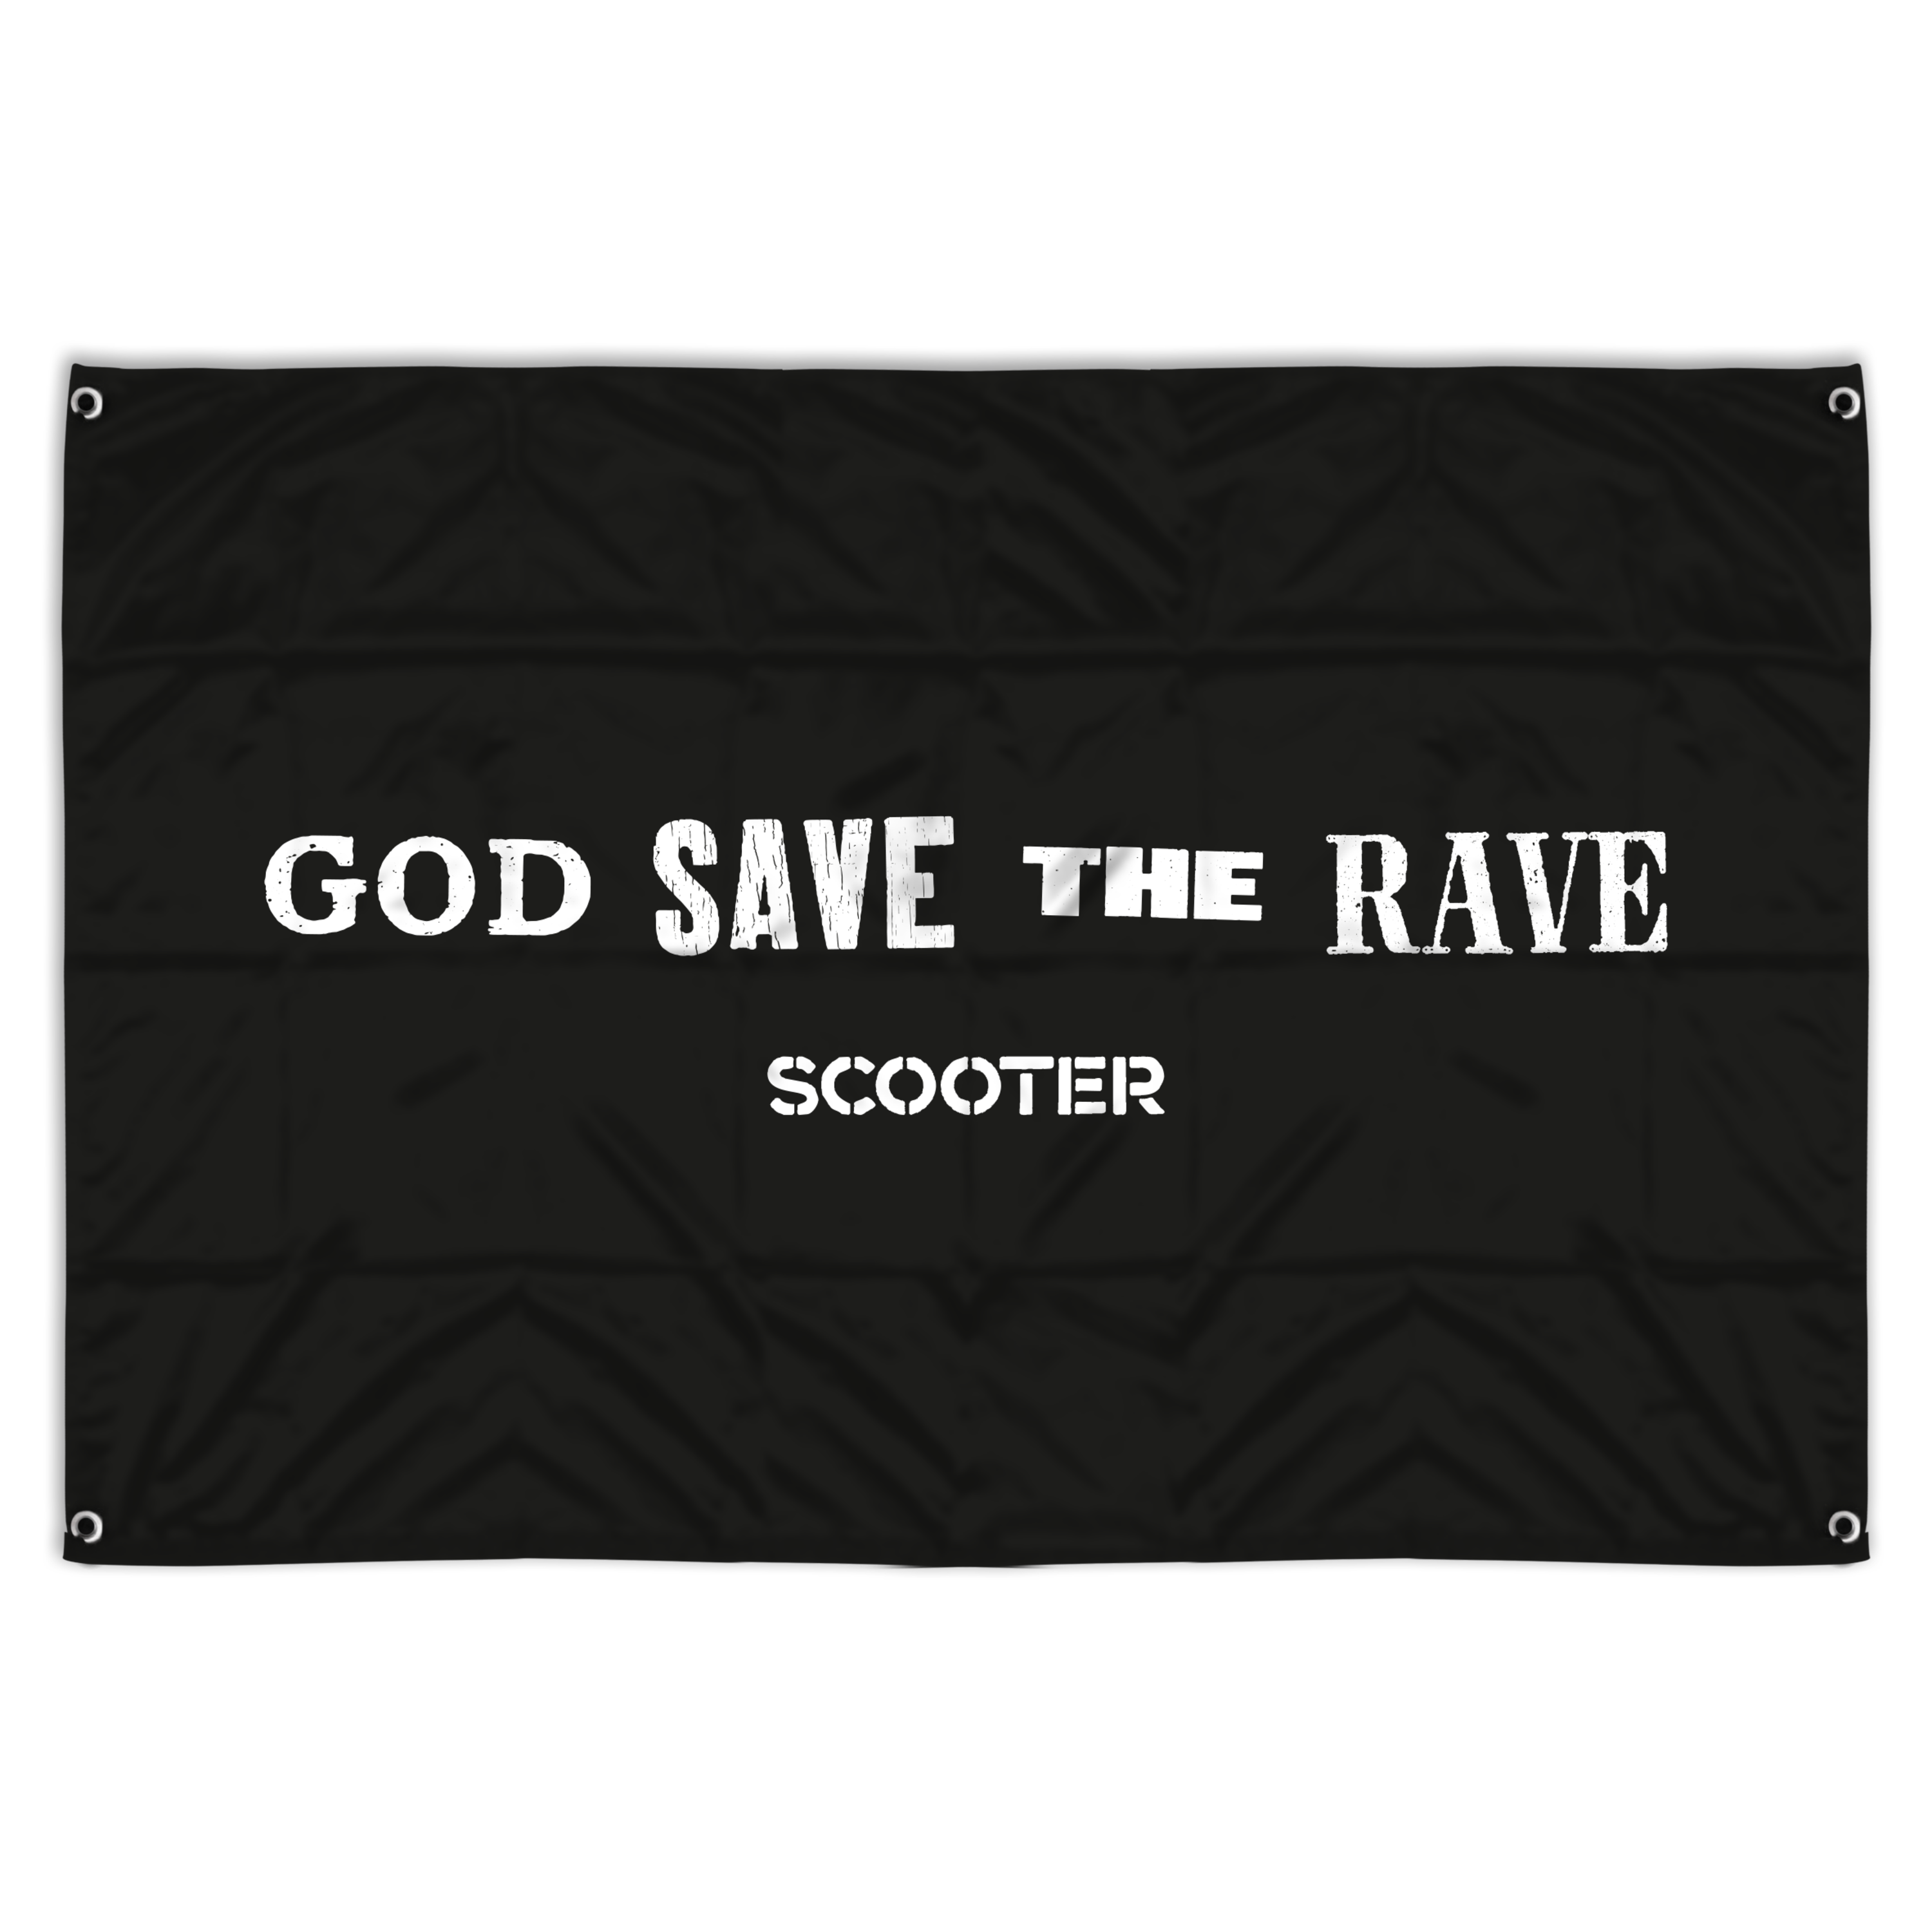 Rave god. God save the Rave. Scooter "God save the Rave". Scooter God save the Rave альбом. Save the Rave магазин.